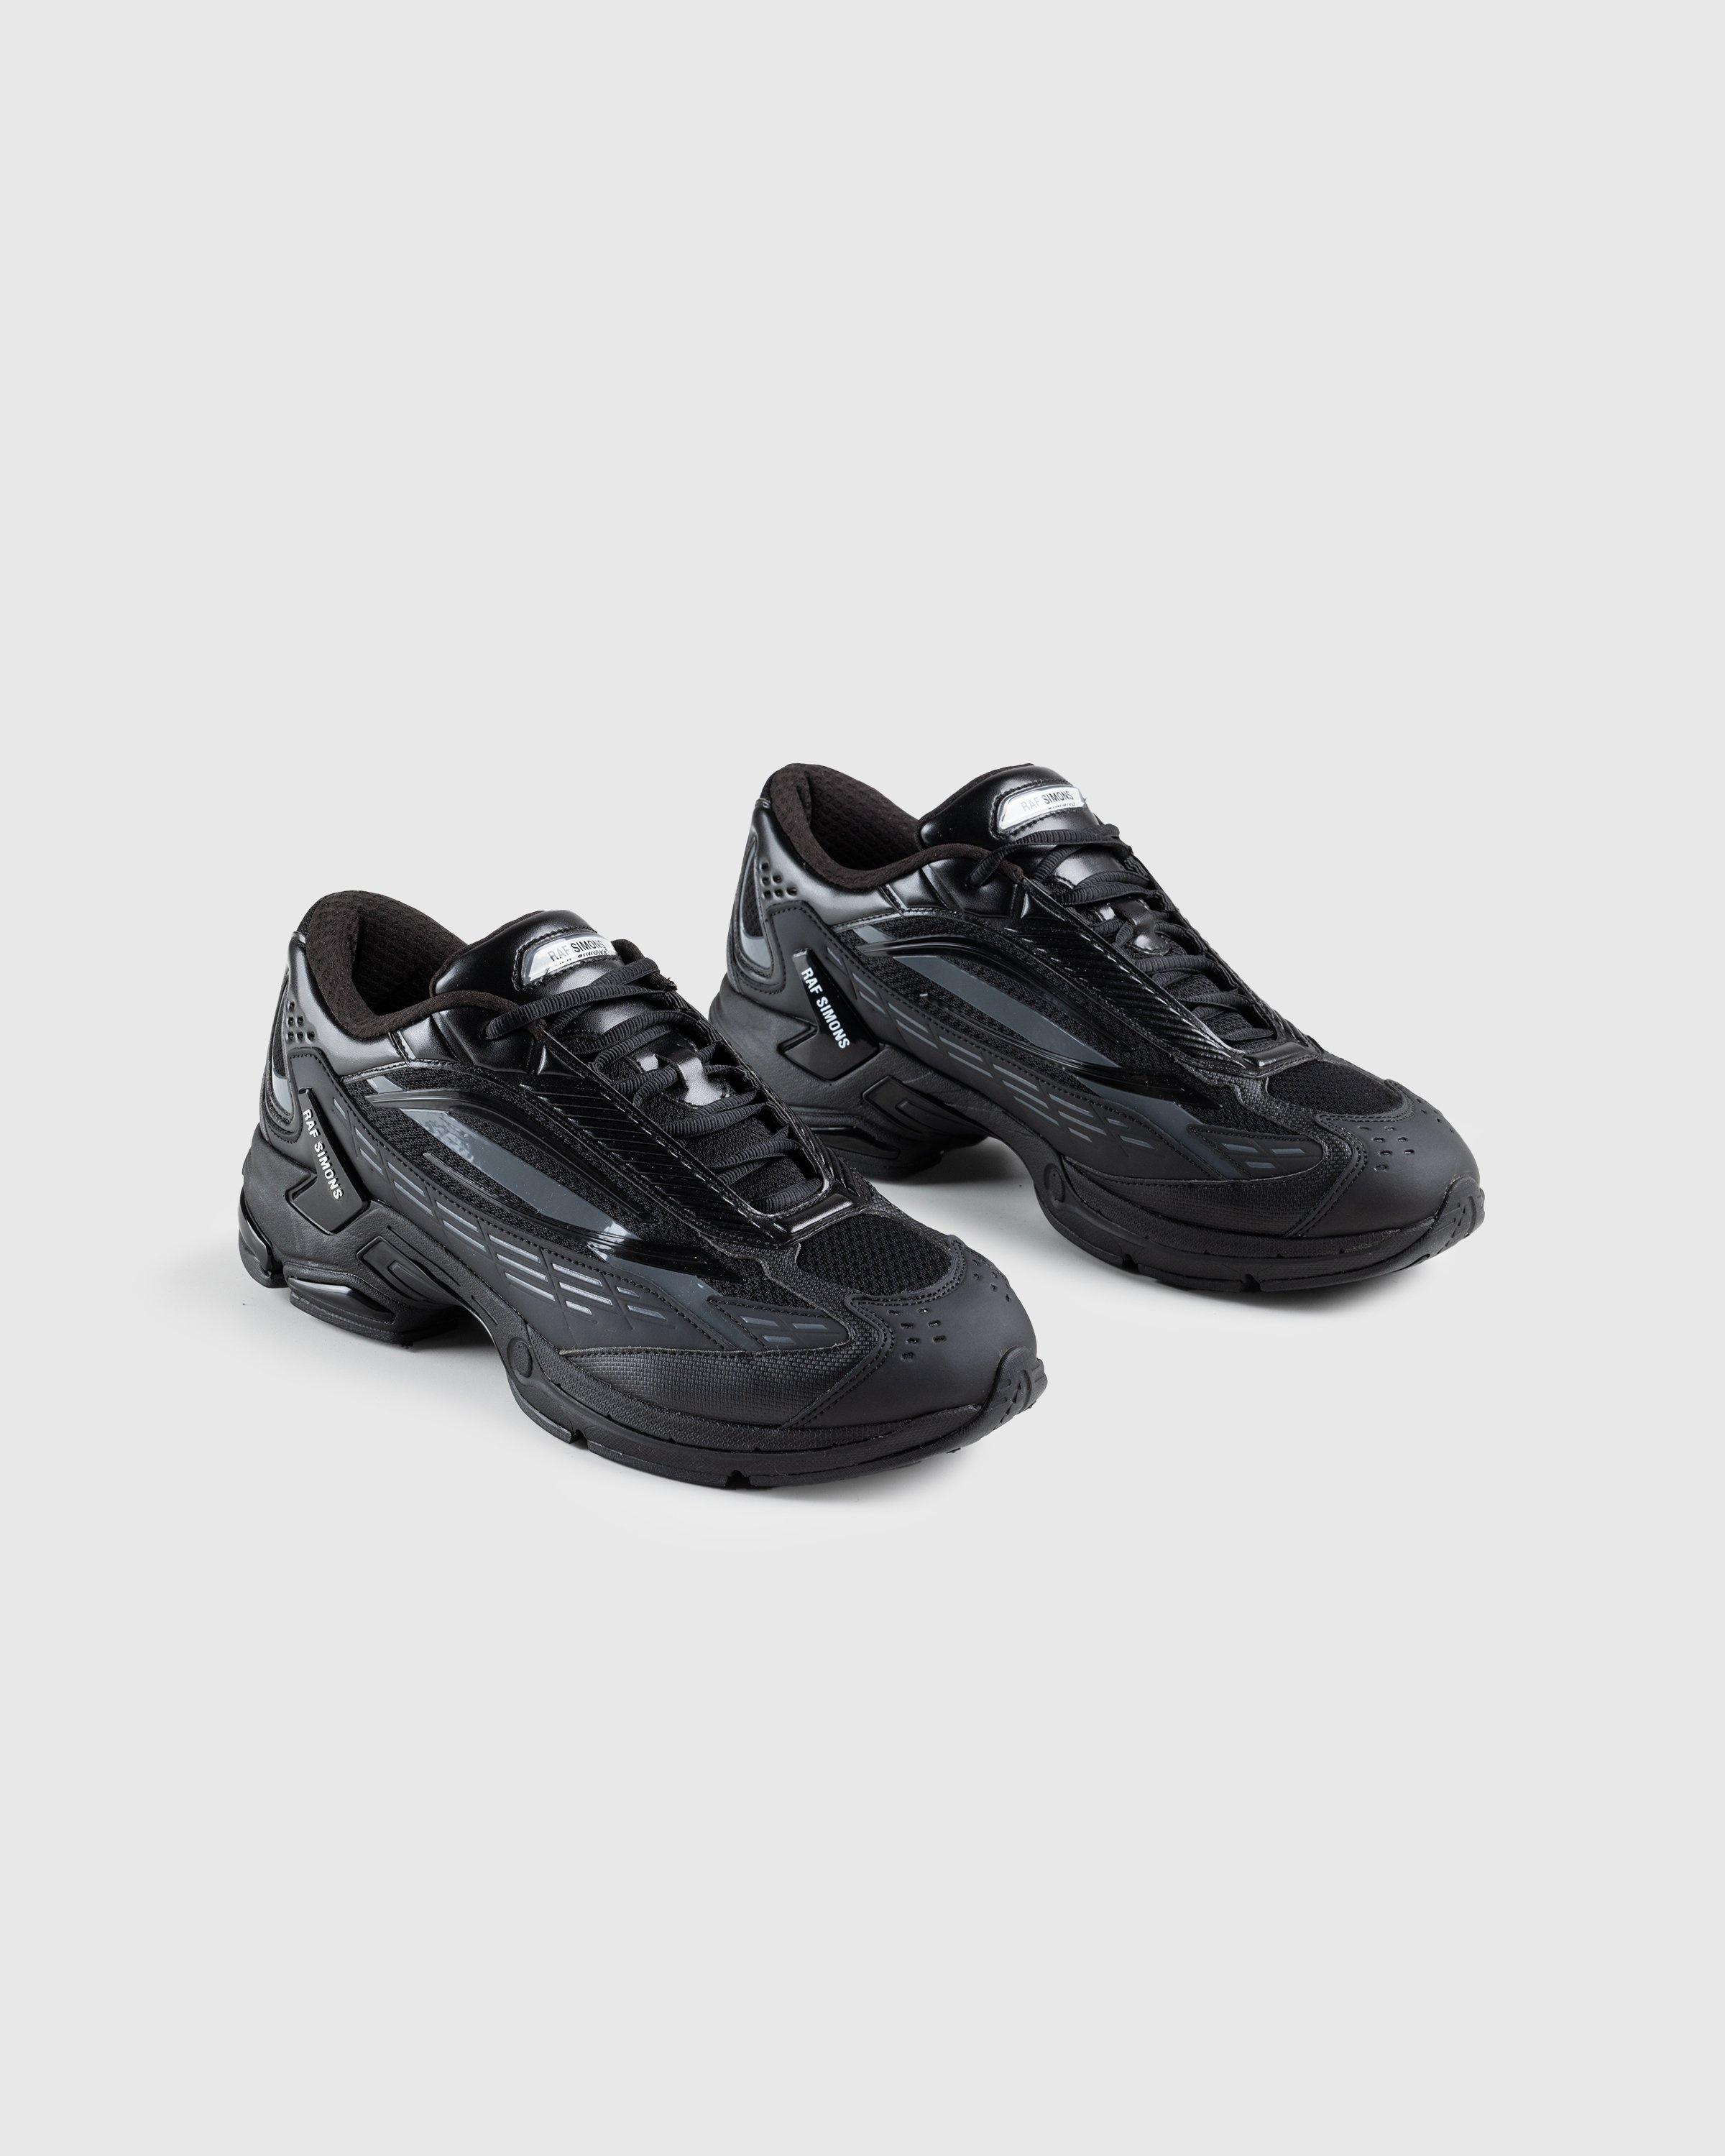 Raf Simons – Ultrasceptre Sneaker Black - Sneakers - Black - Image 3